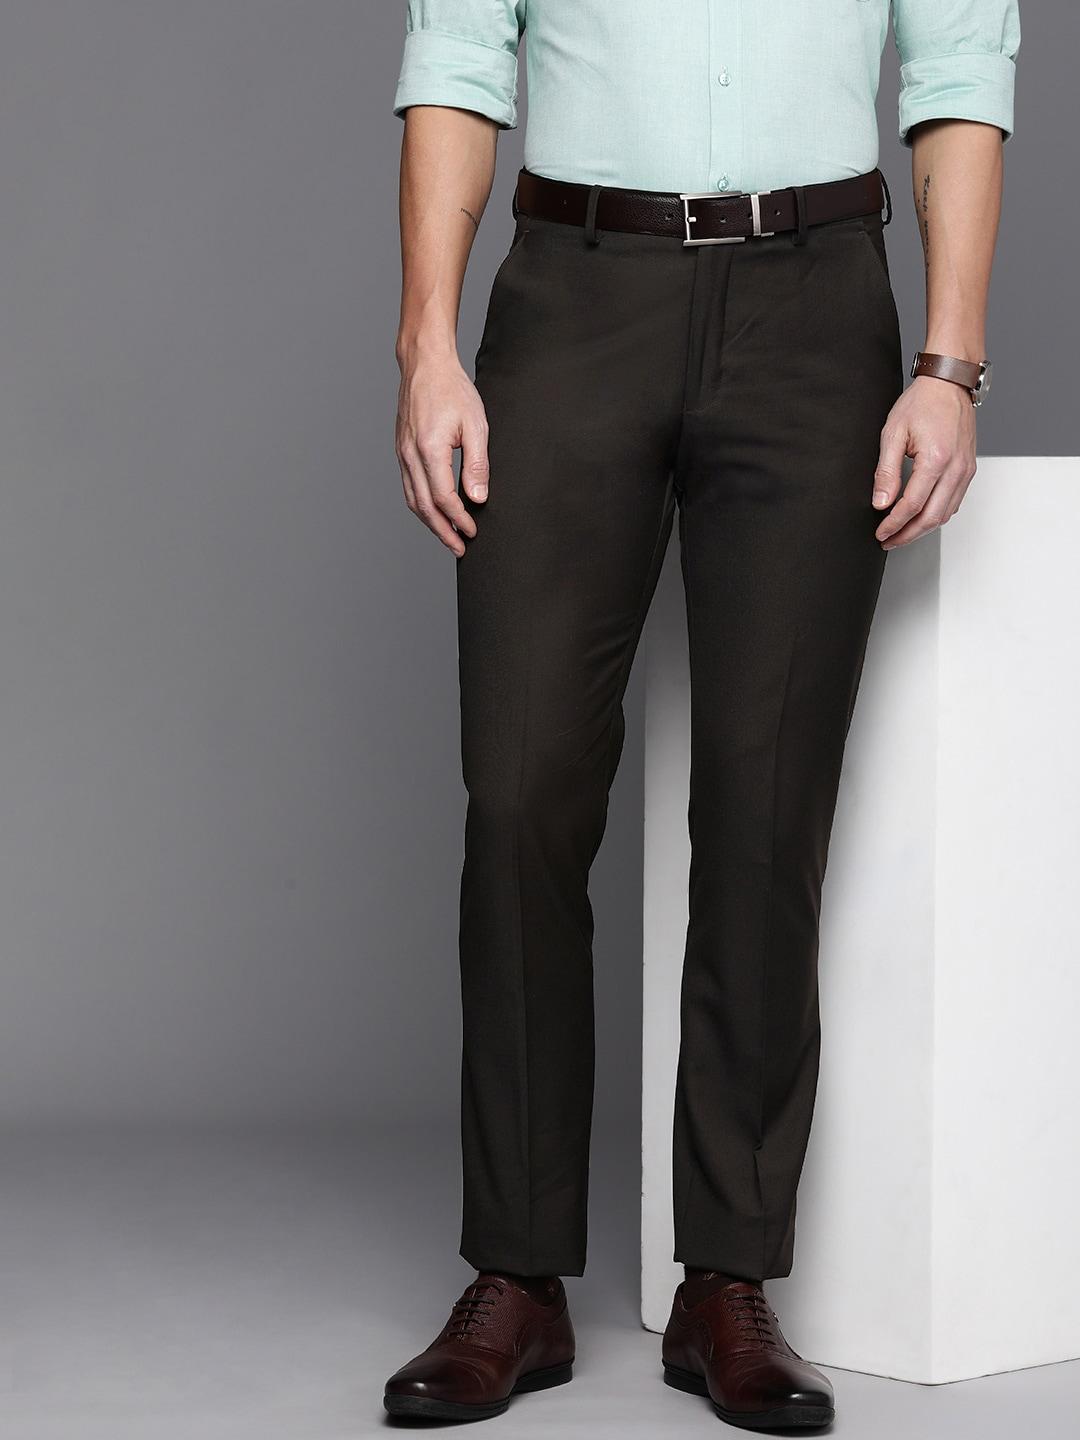 louis-philippe-men-solid-slim-fit-formal-trousers